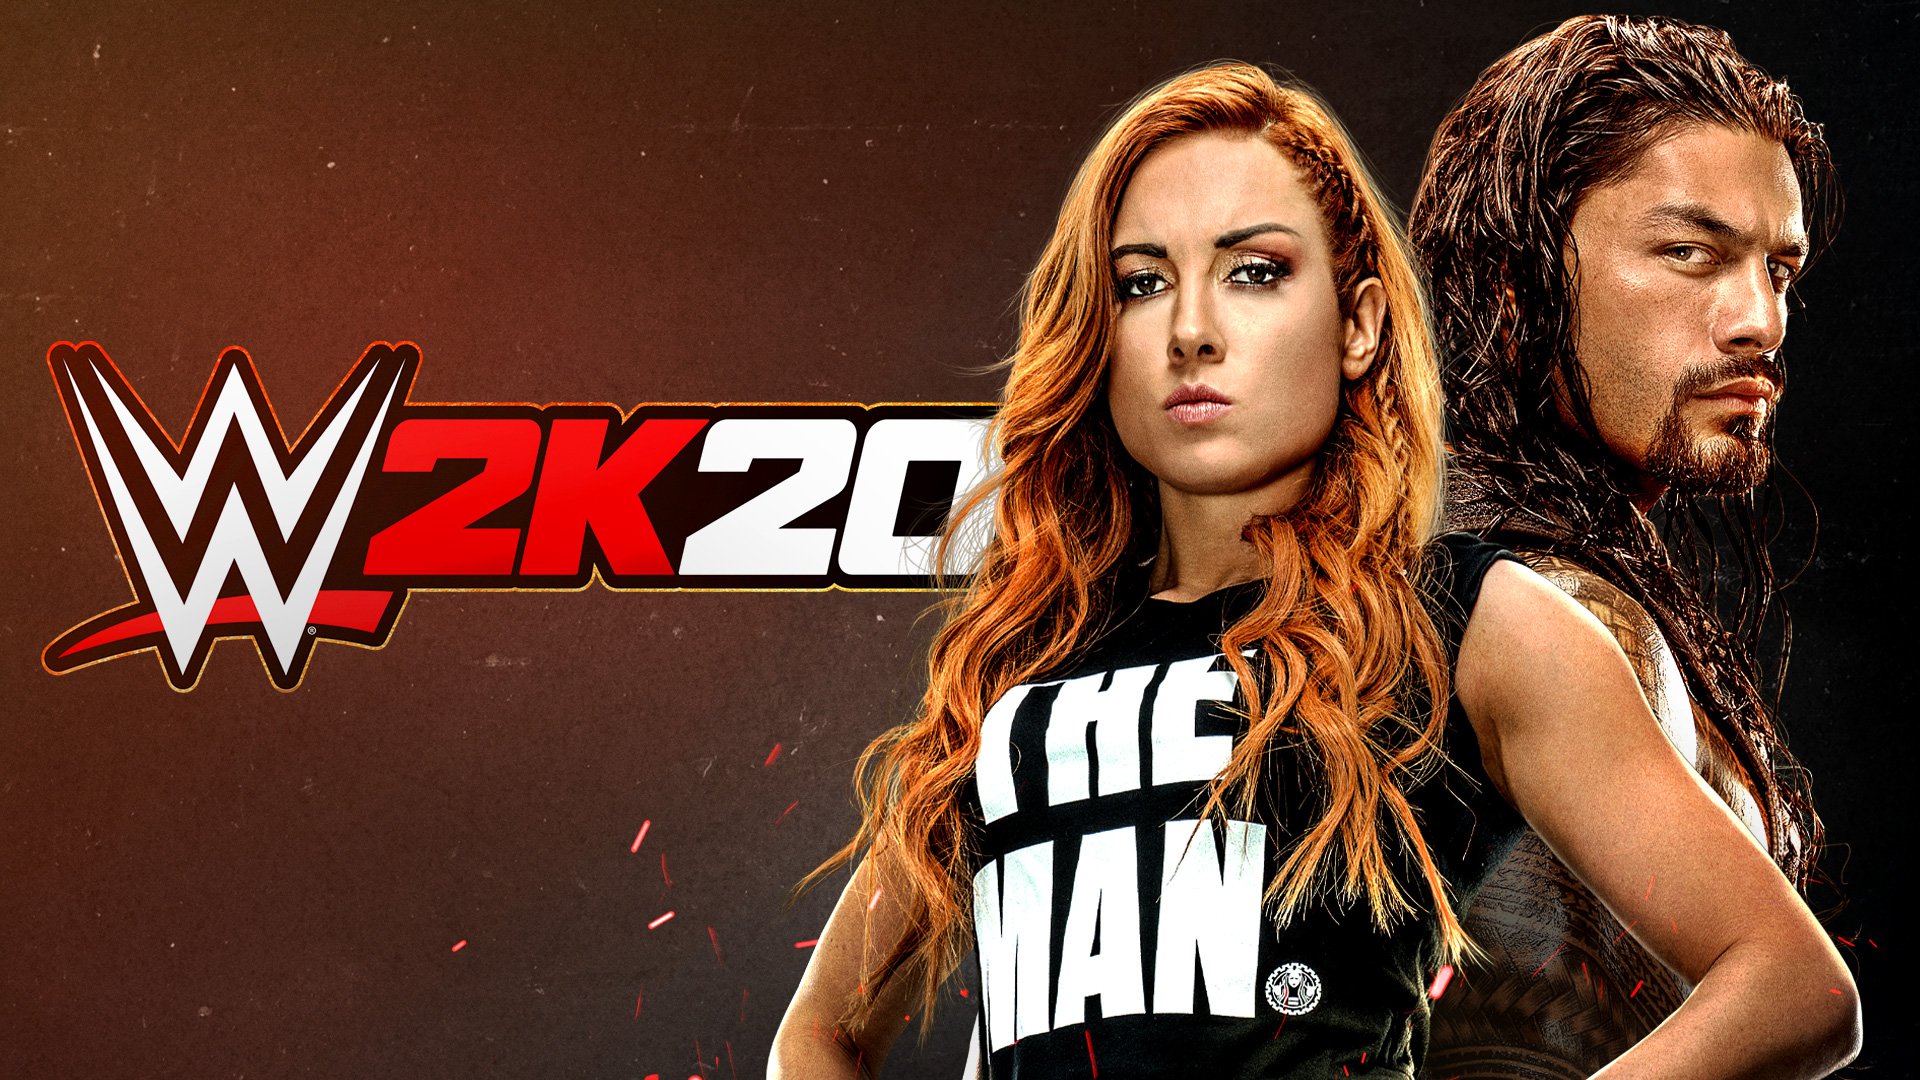 30-Man WWE 2K20 Viewer Simulation Rumble